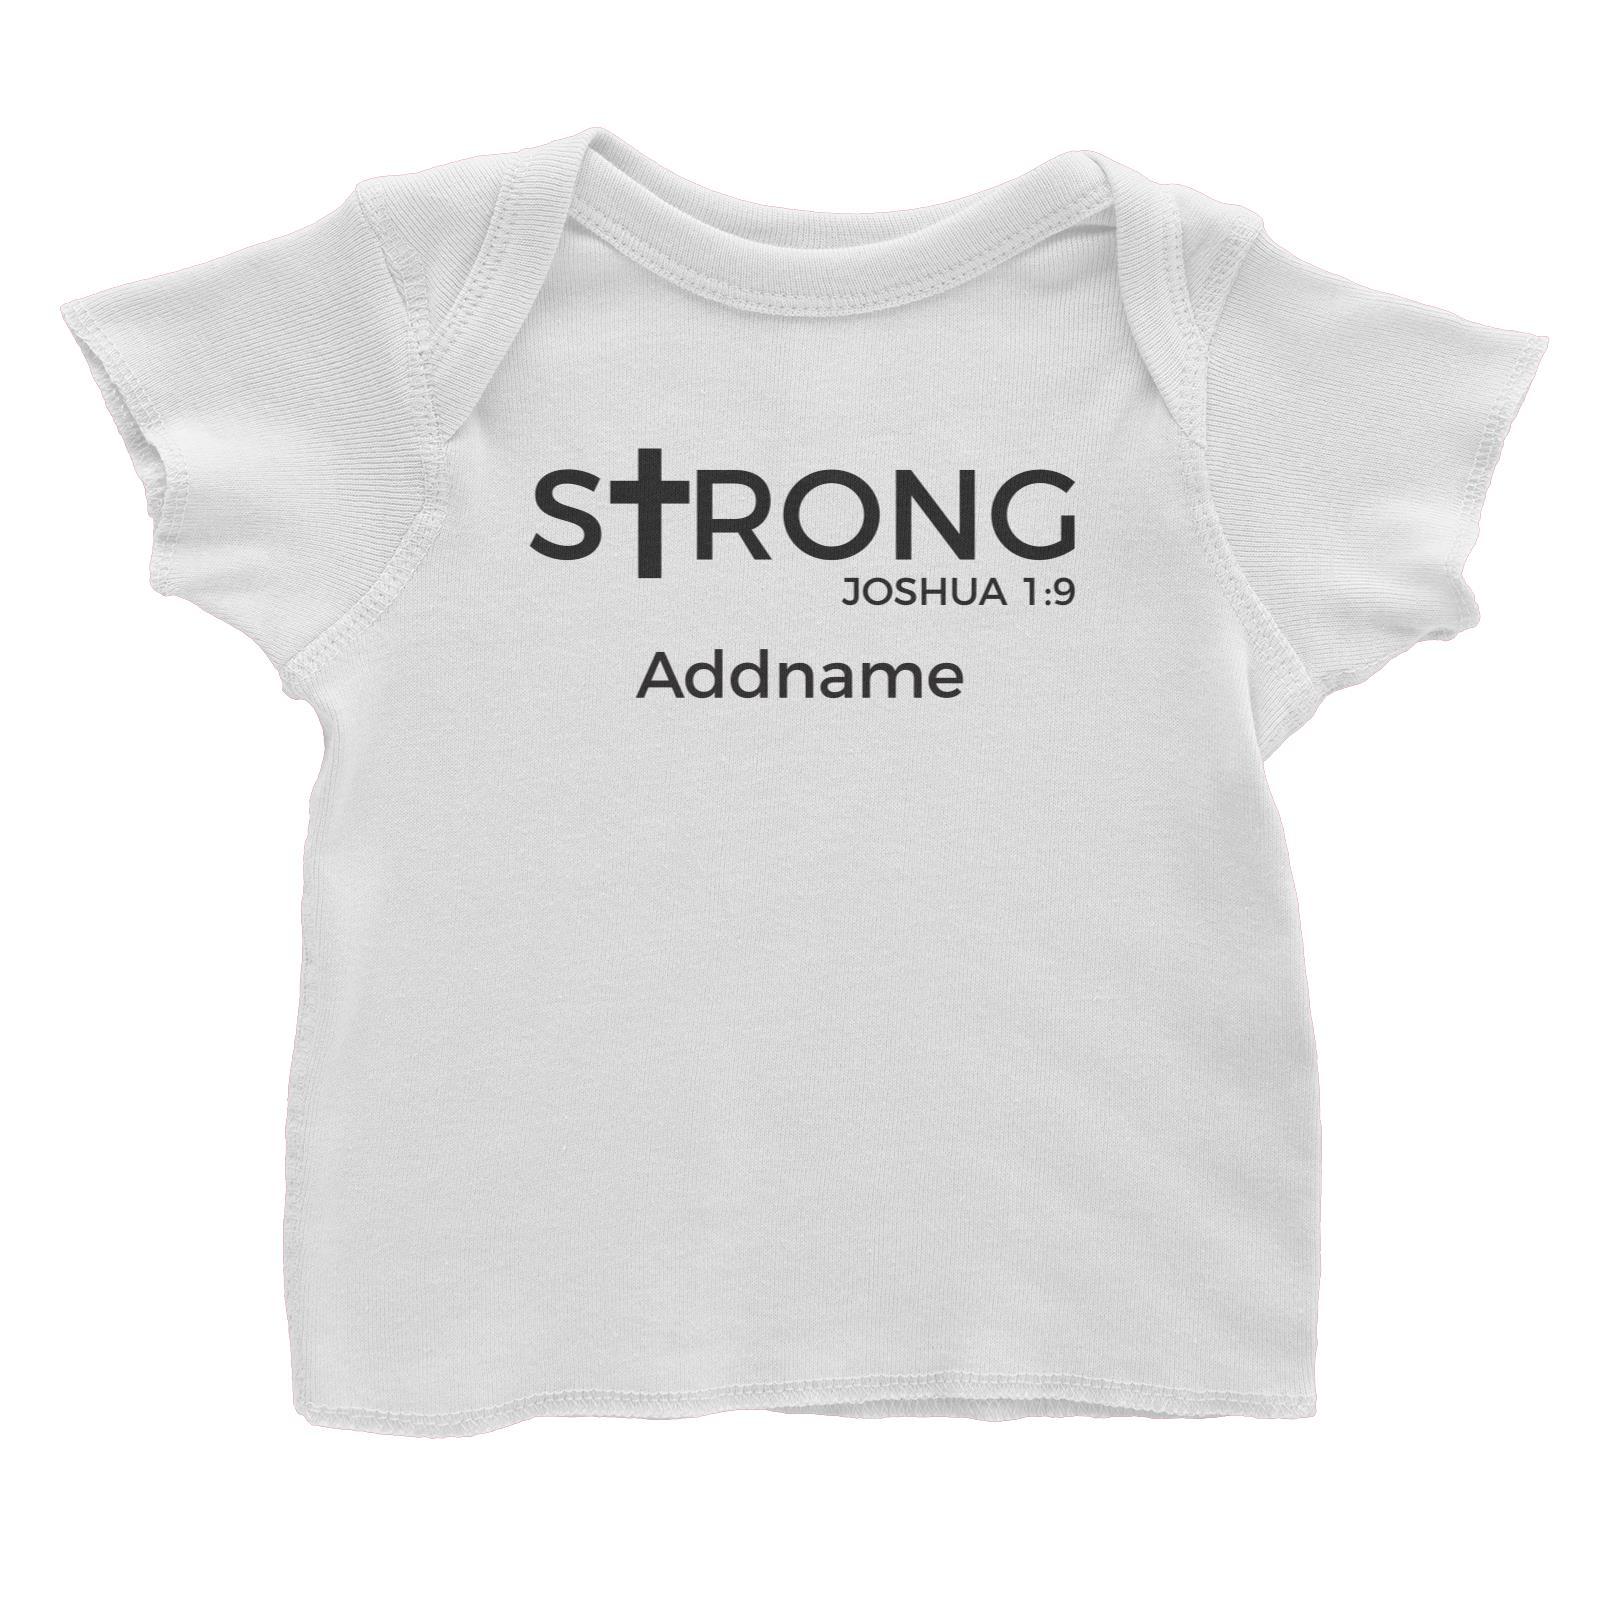 Christian Series Strong Joshua 1.9 Addname Baby T-Shirt